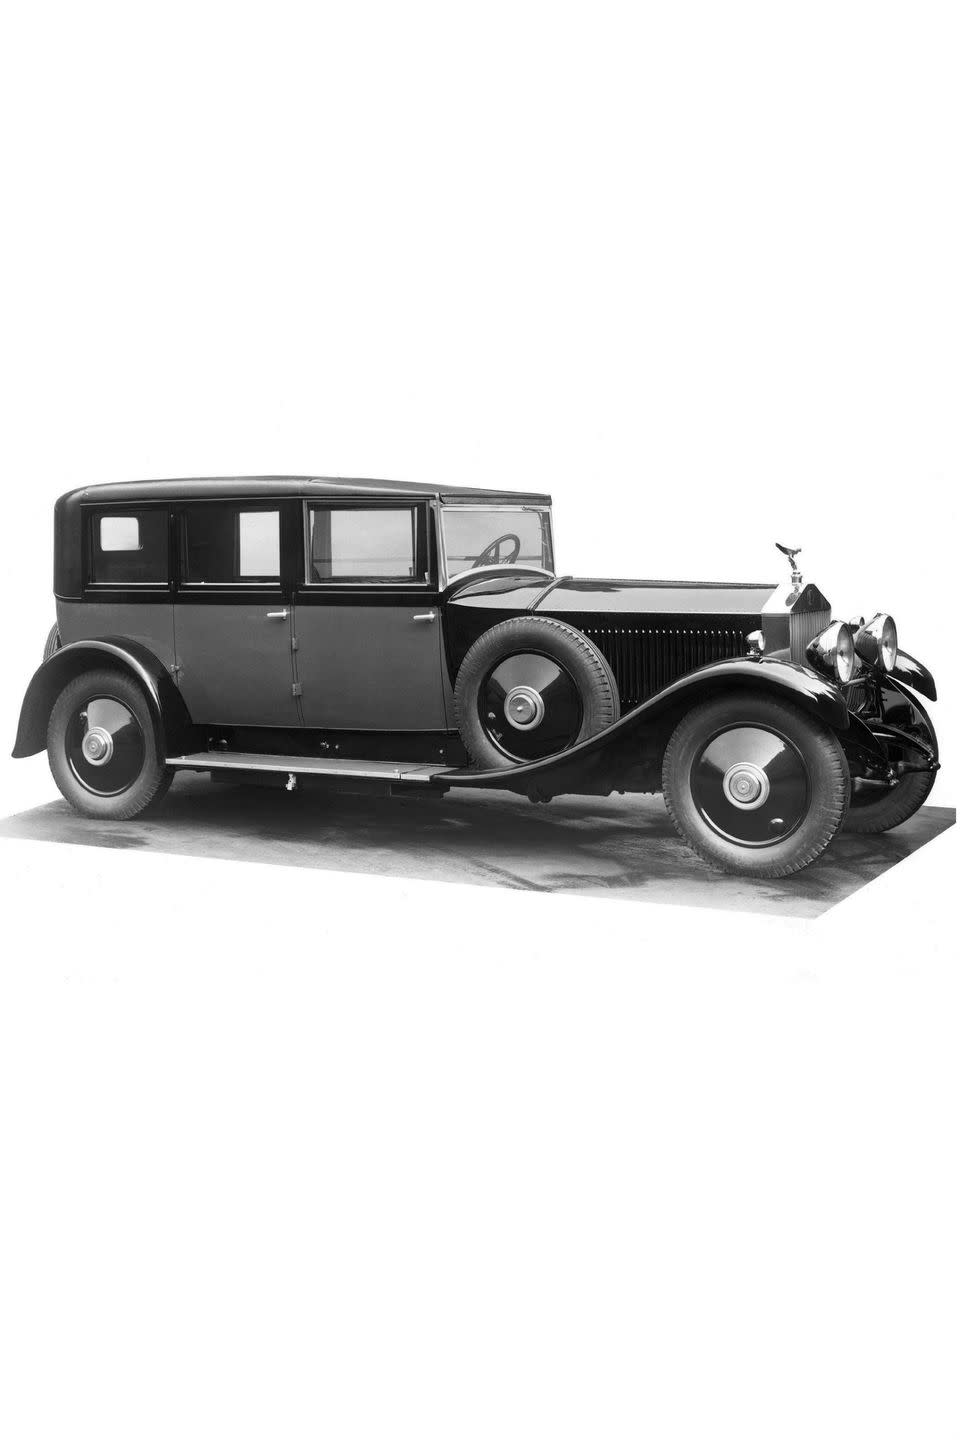 1925: Rolls-Royce Phantom I